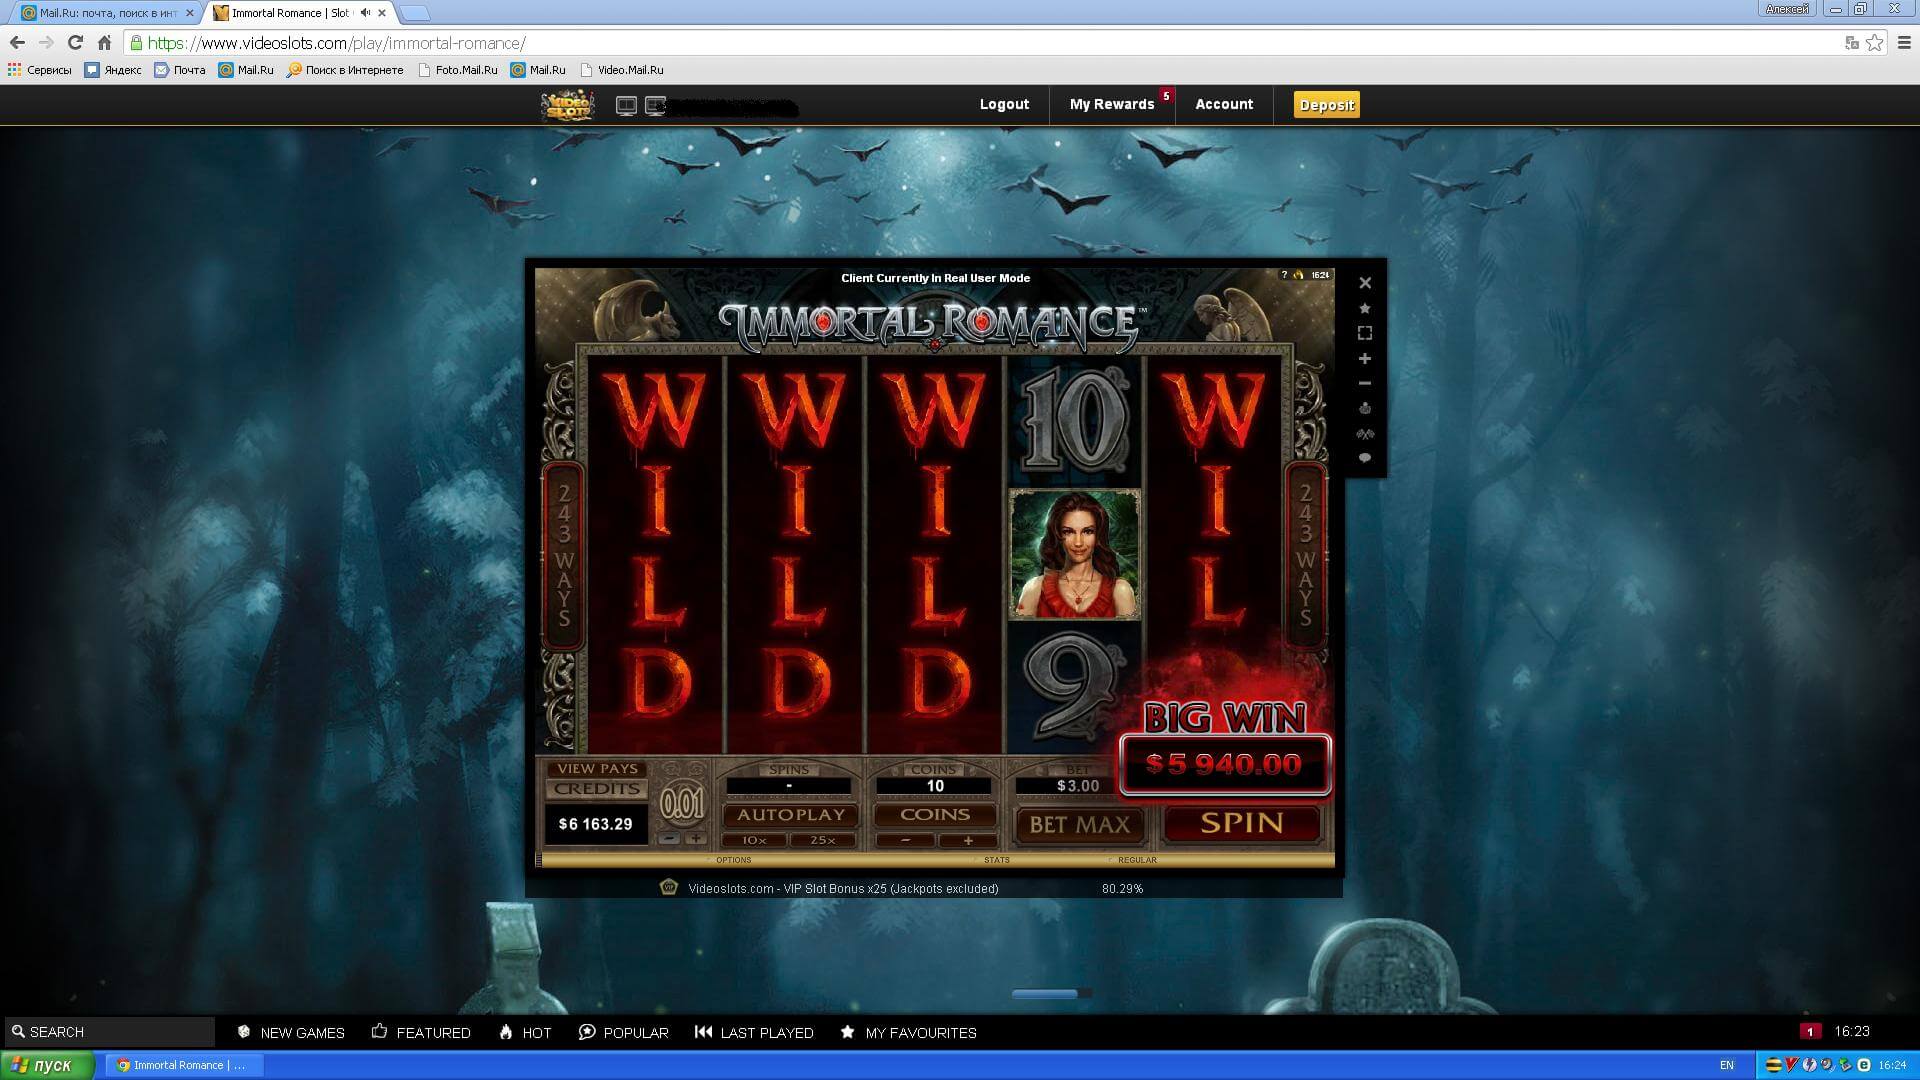 William hill casino online roulette & blackjack